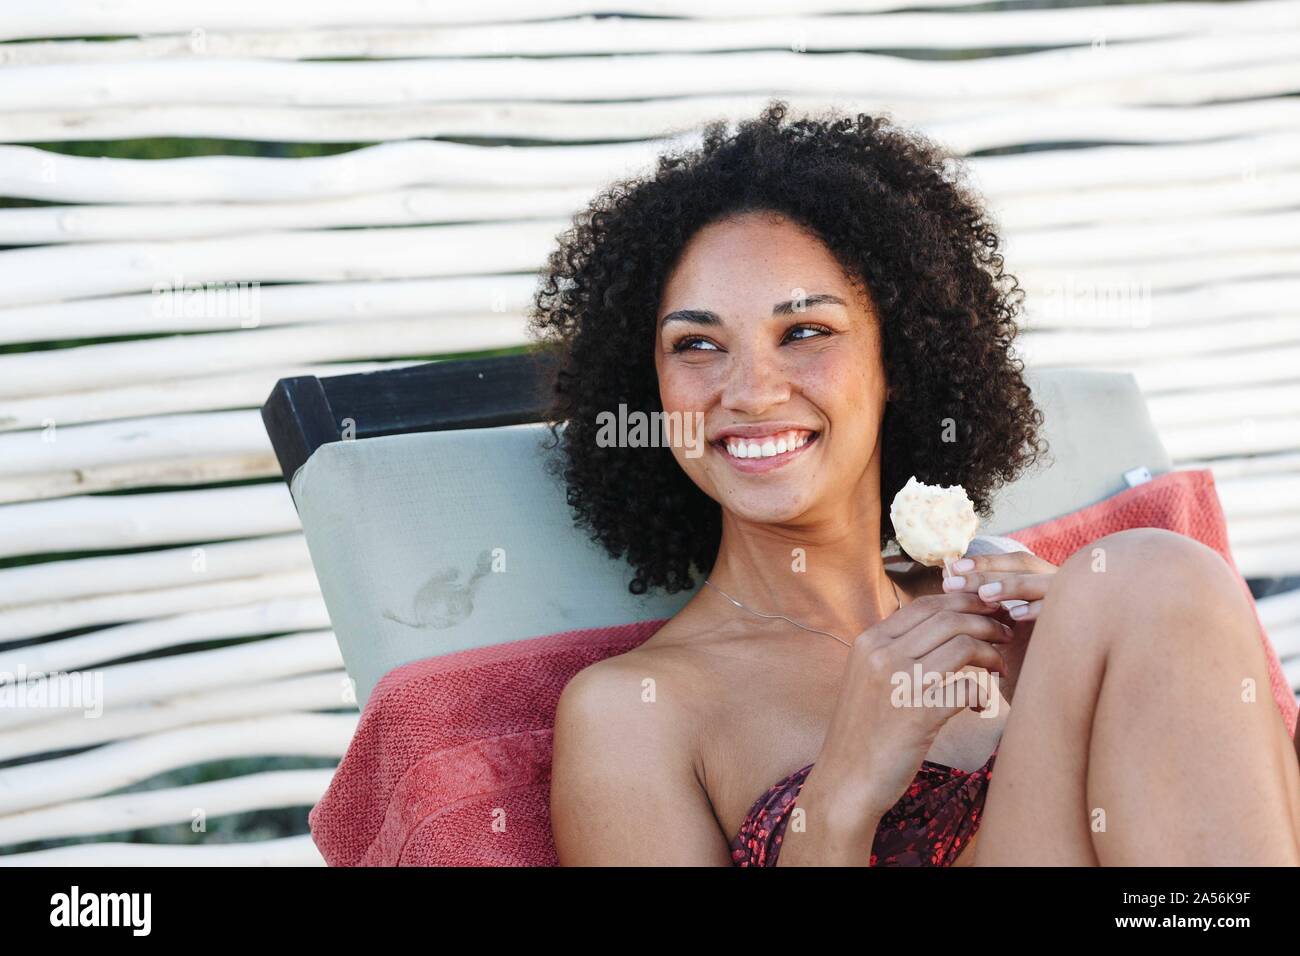 Woman enjoying ice cream on deckchair Stock Photo